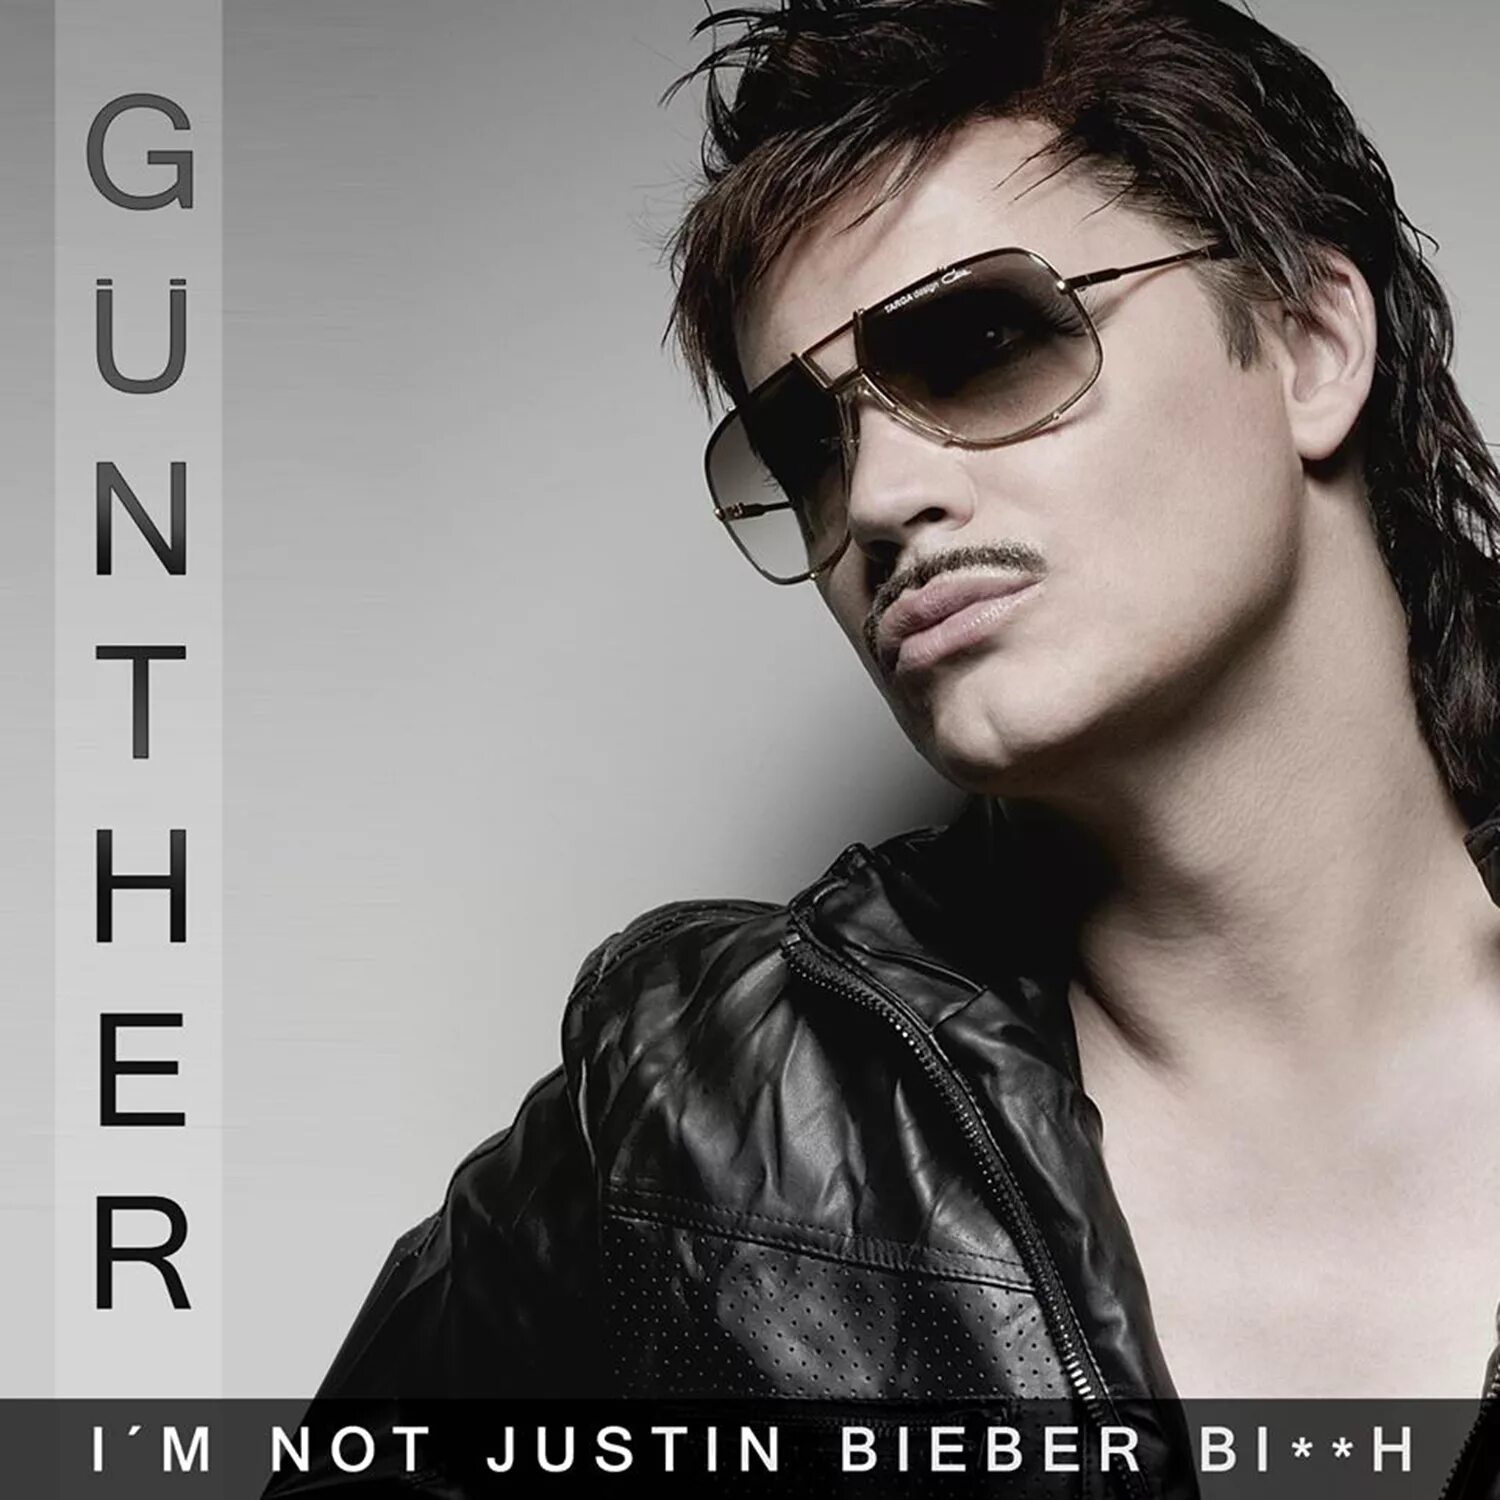 Песня ю спид. Gunther. Günther (музыкант). Gunther певец сейчас. Gunther 2020 певец.